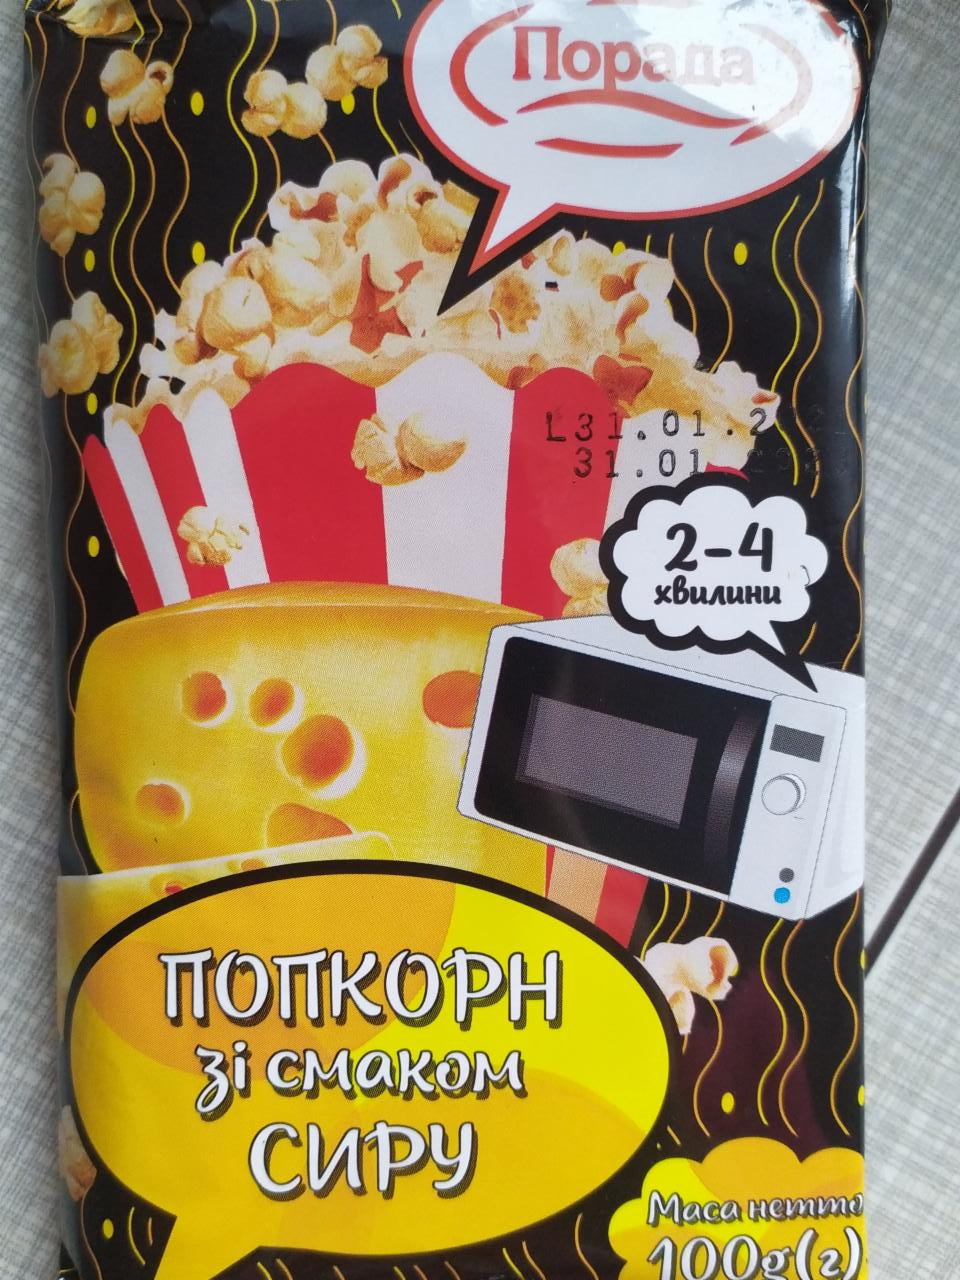 Фото - попкорн со вкусом сыра Порада